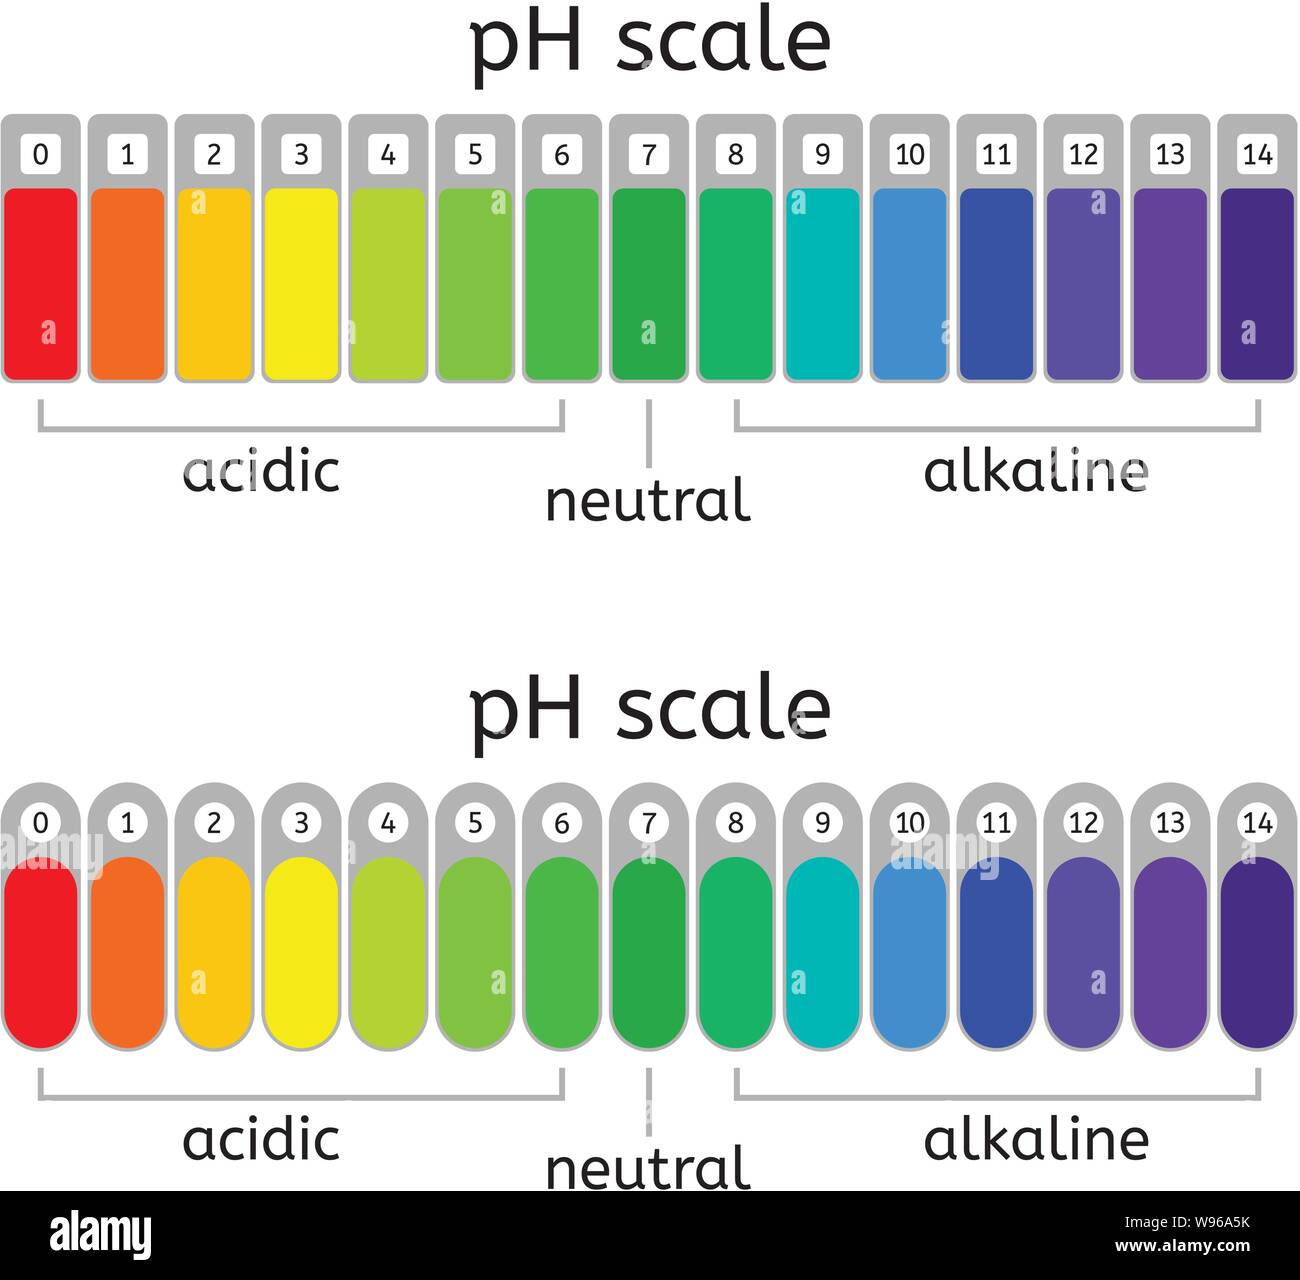 Ph Scale Horizontal